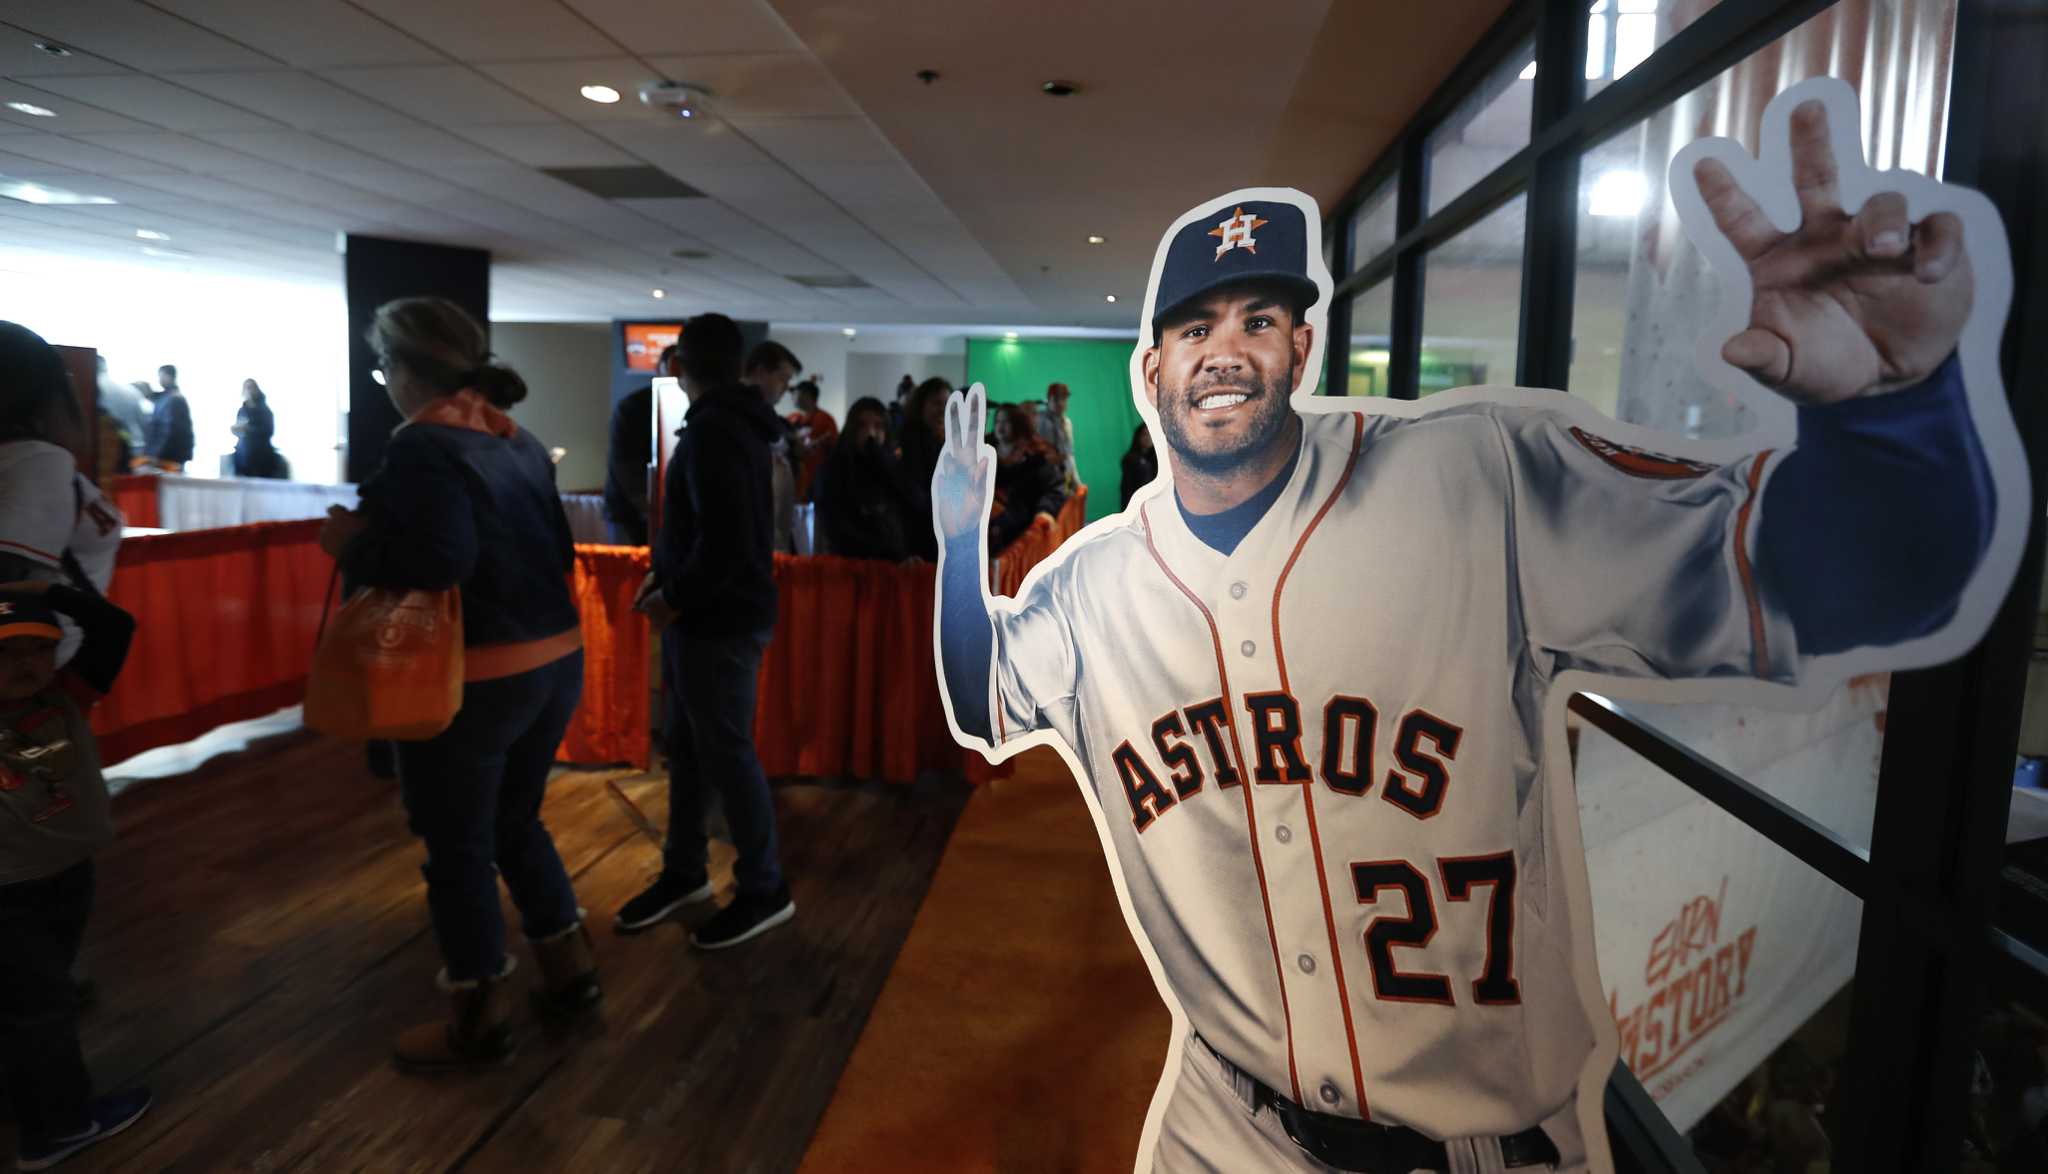 Orbit Mascot Handler Among Many Houston Astros Jobs Available